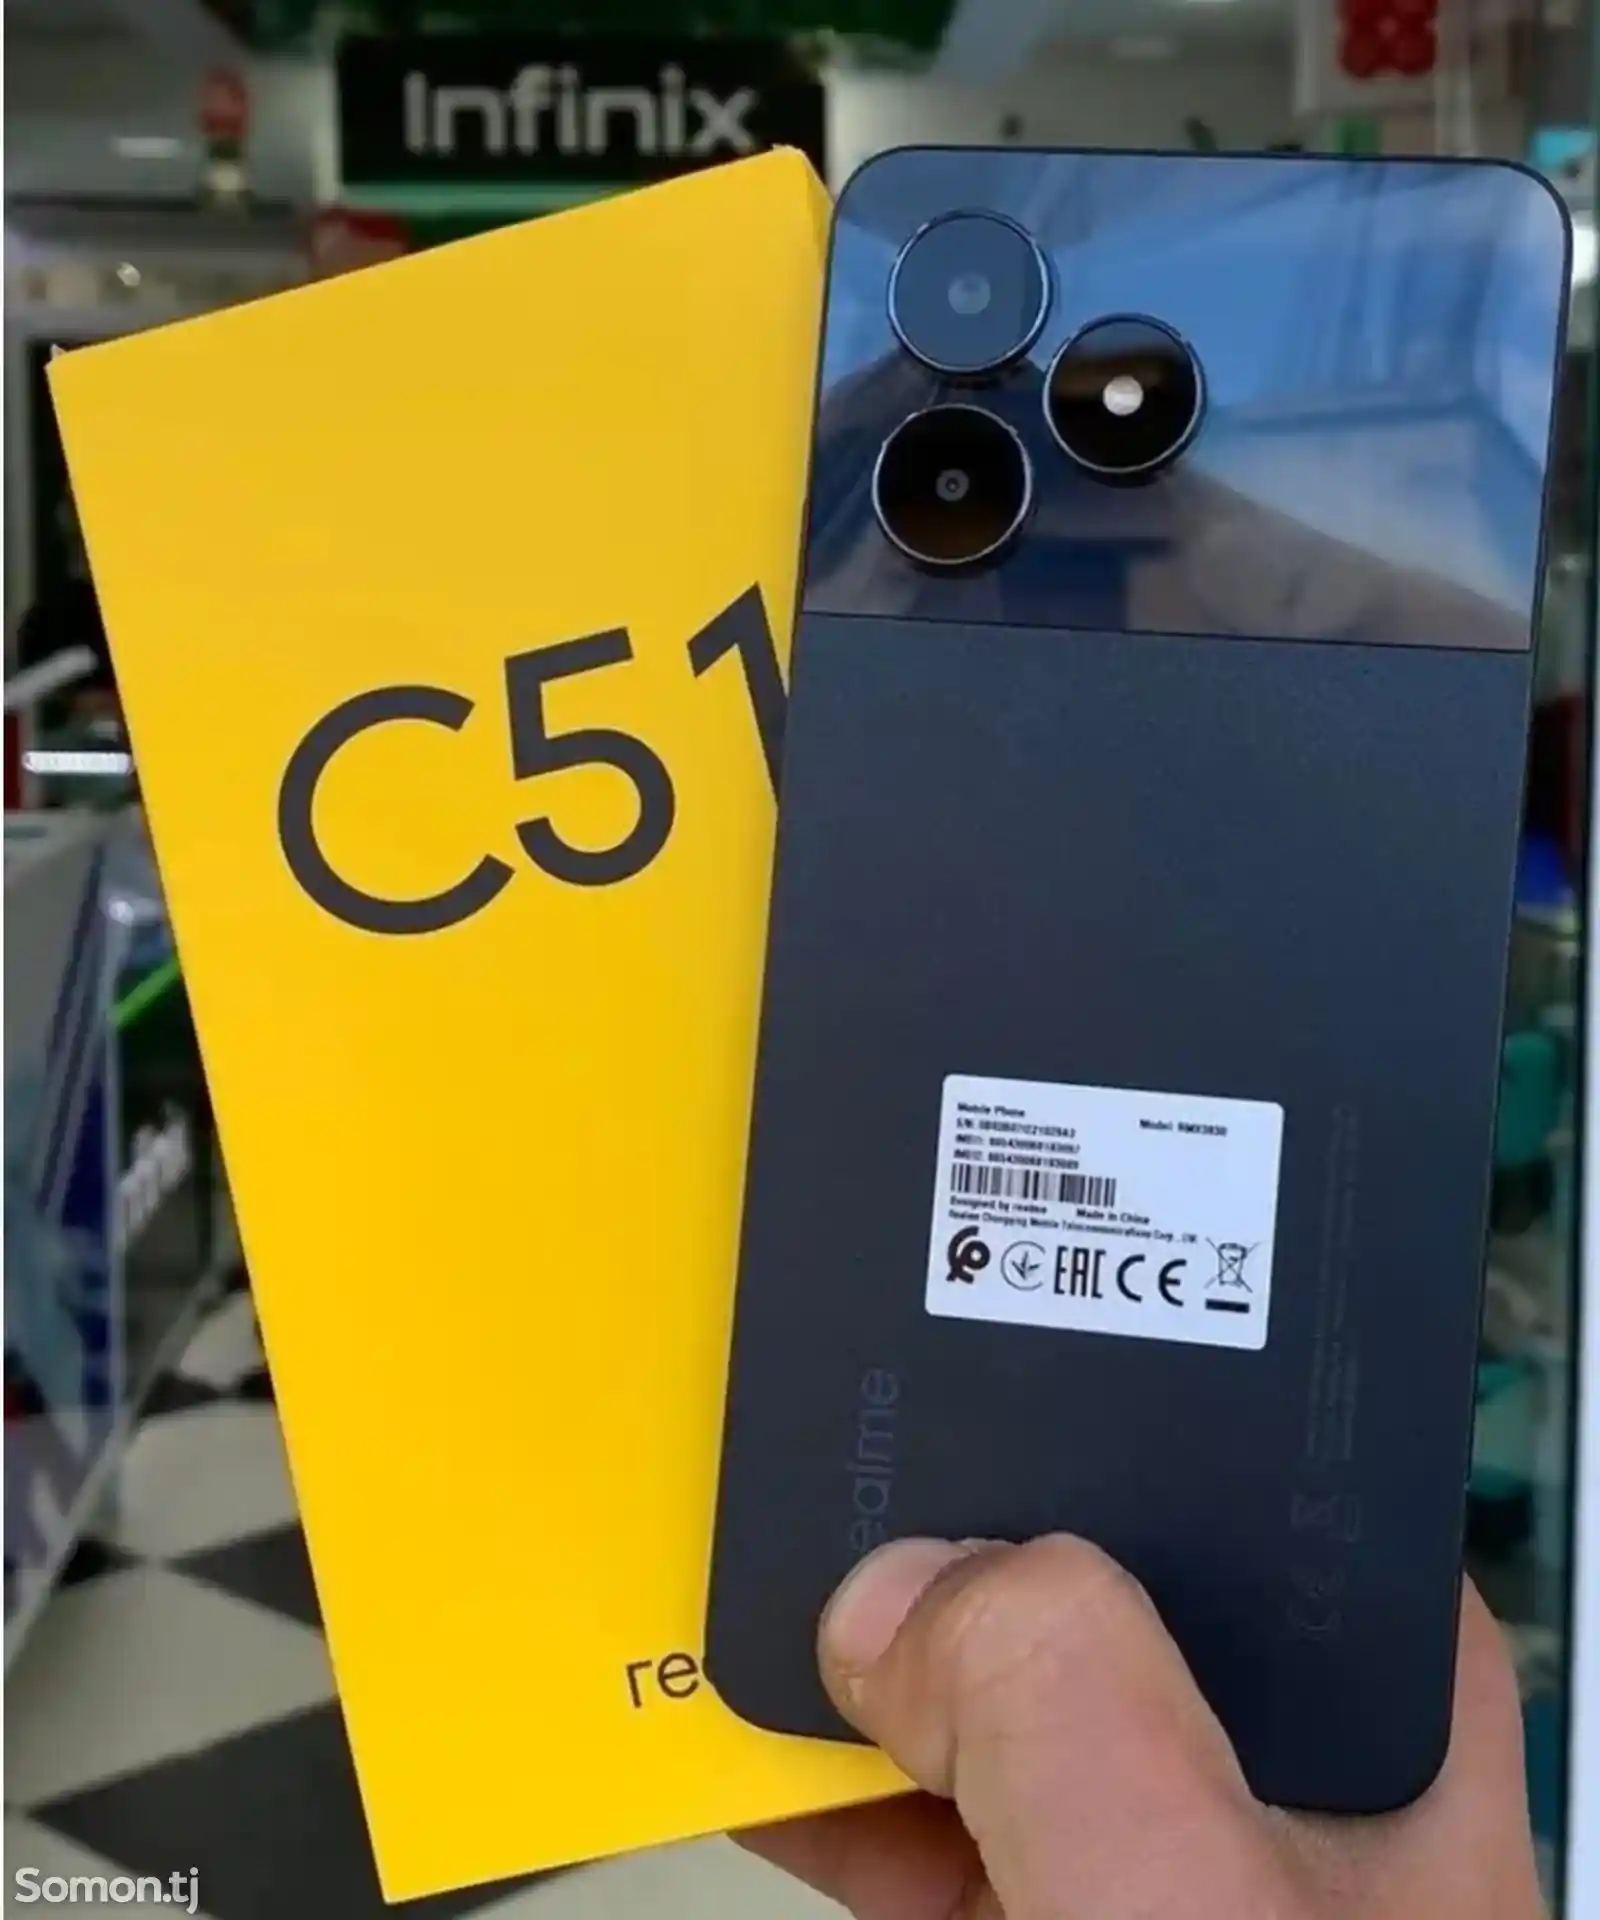 Realme C51 128Gb Blue-3